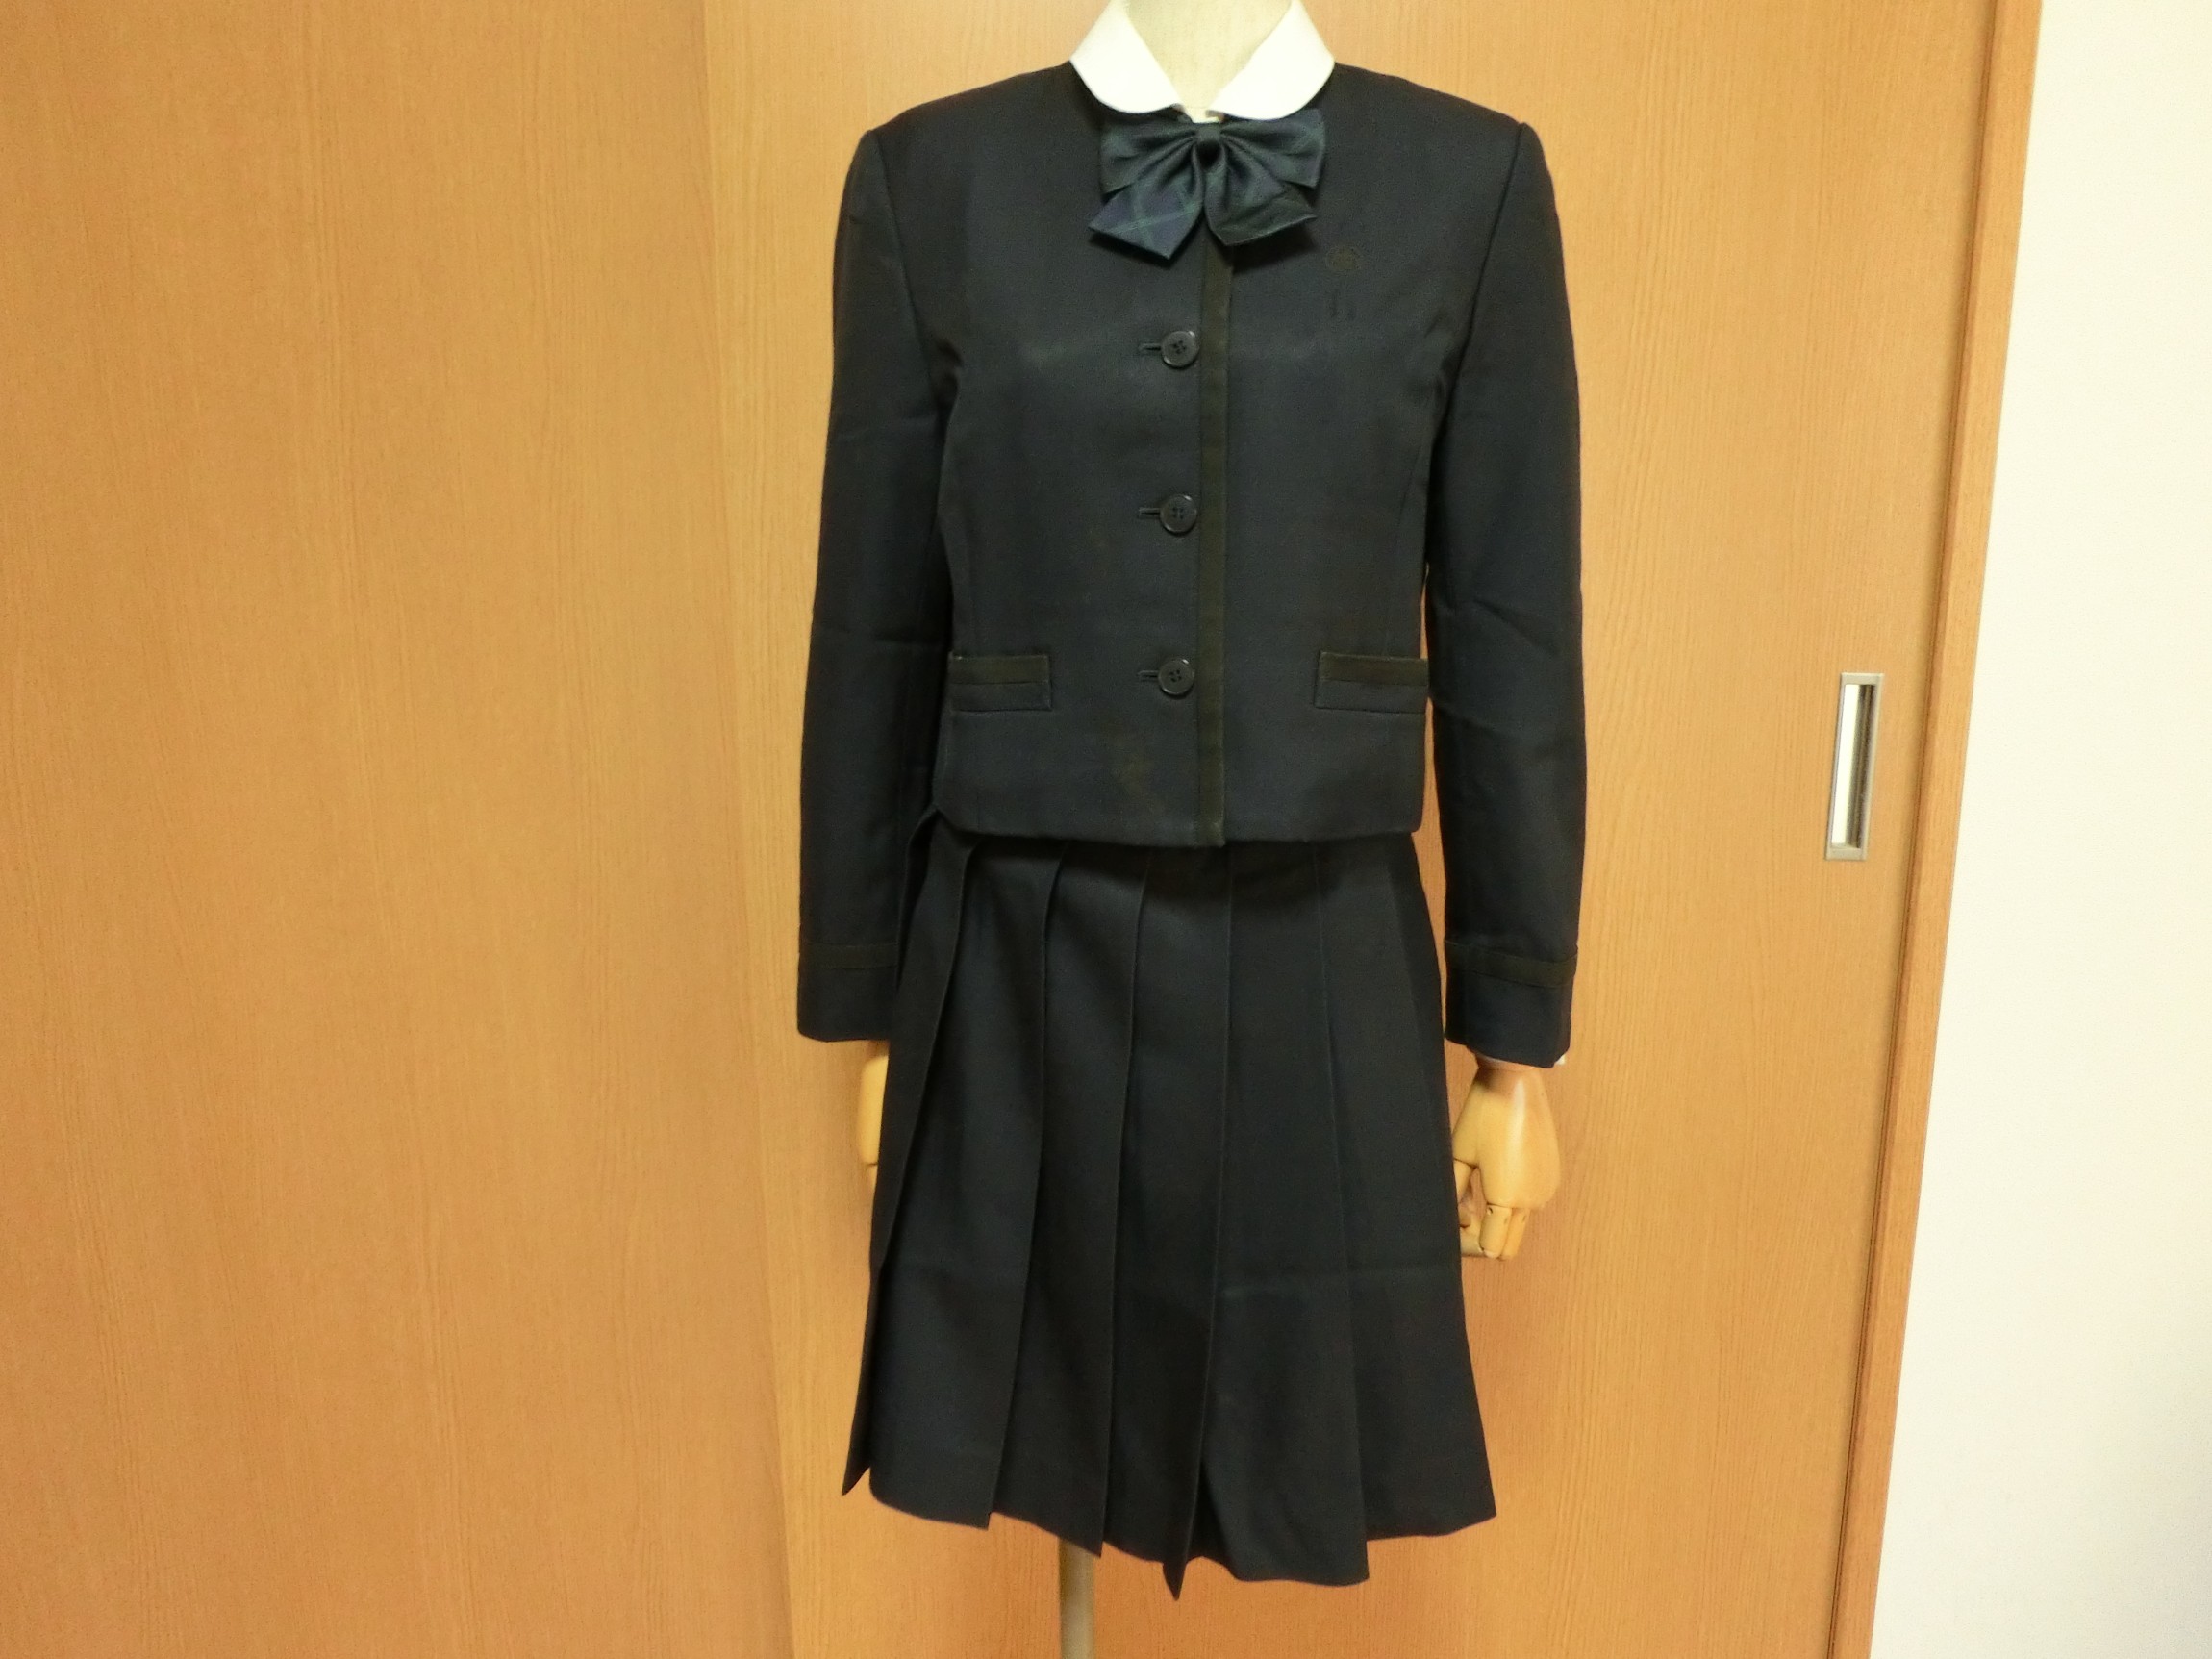 福岡有朋高等専修学校男子用冬服上下セット 170A - スーツ